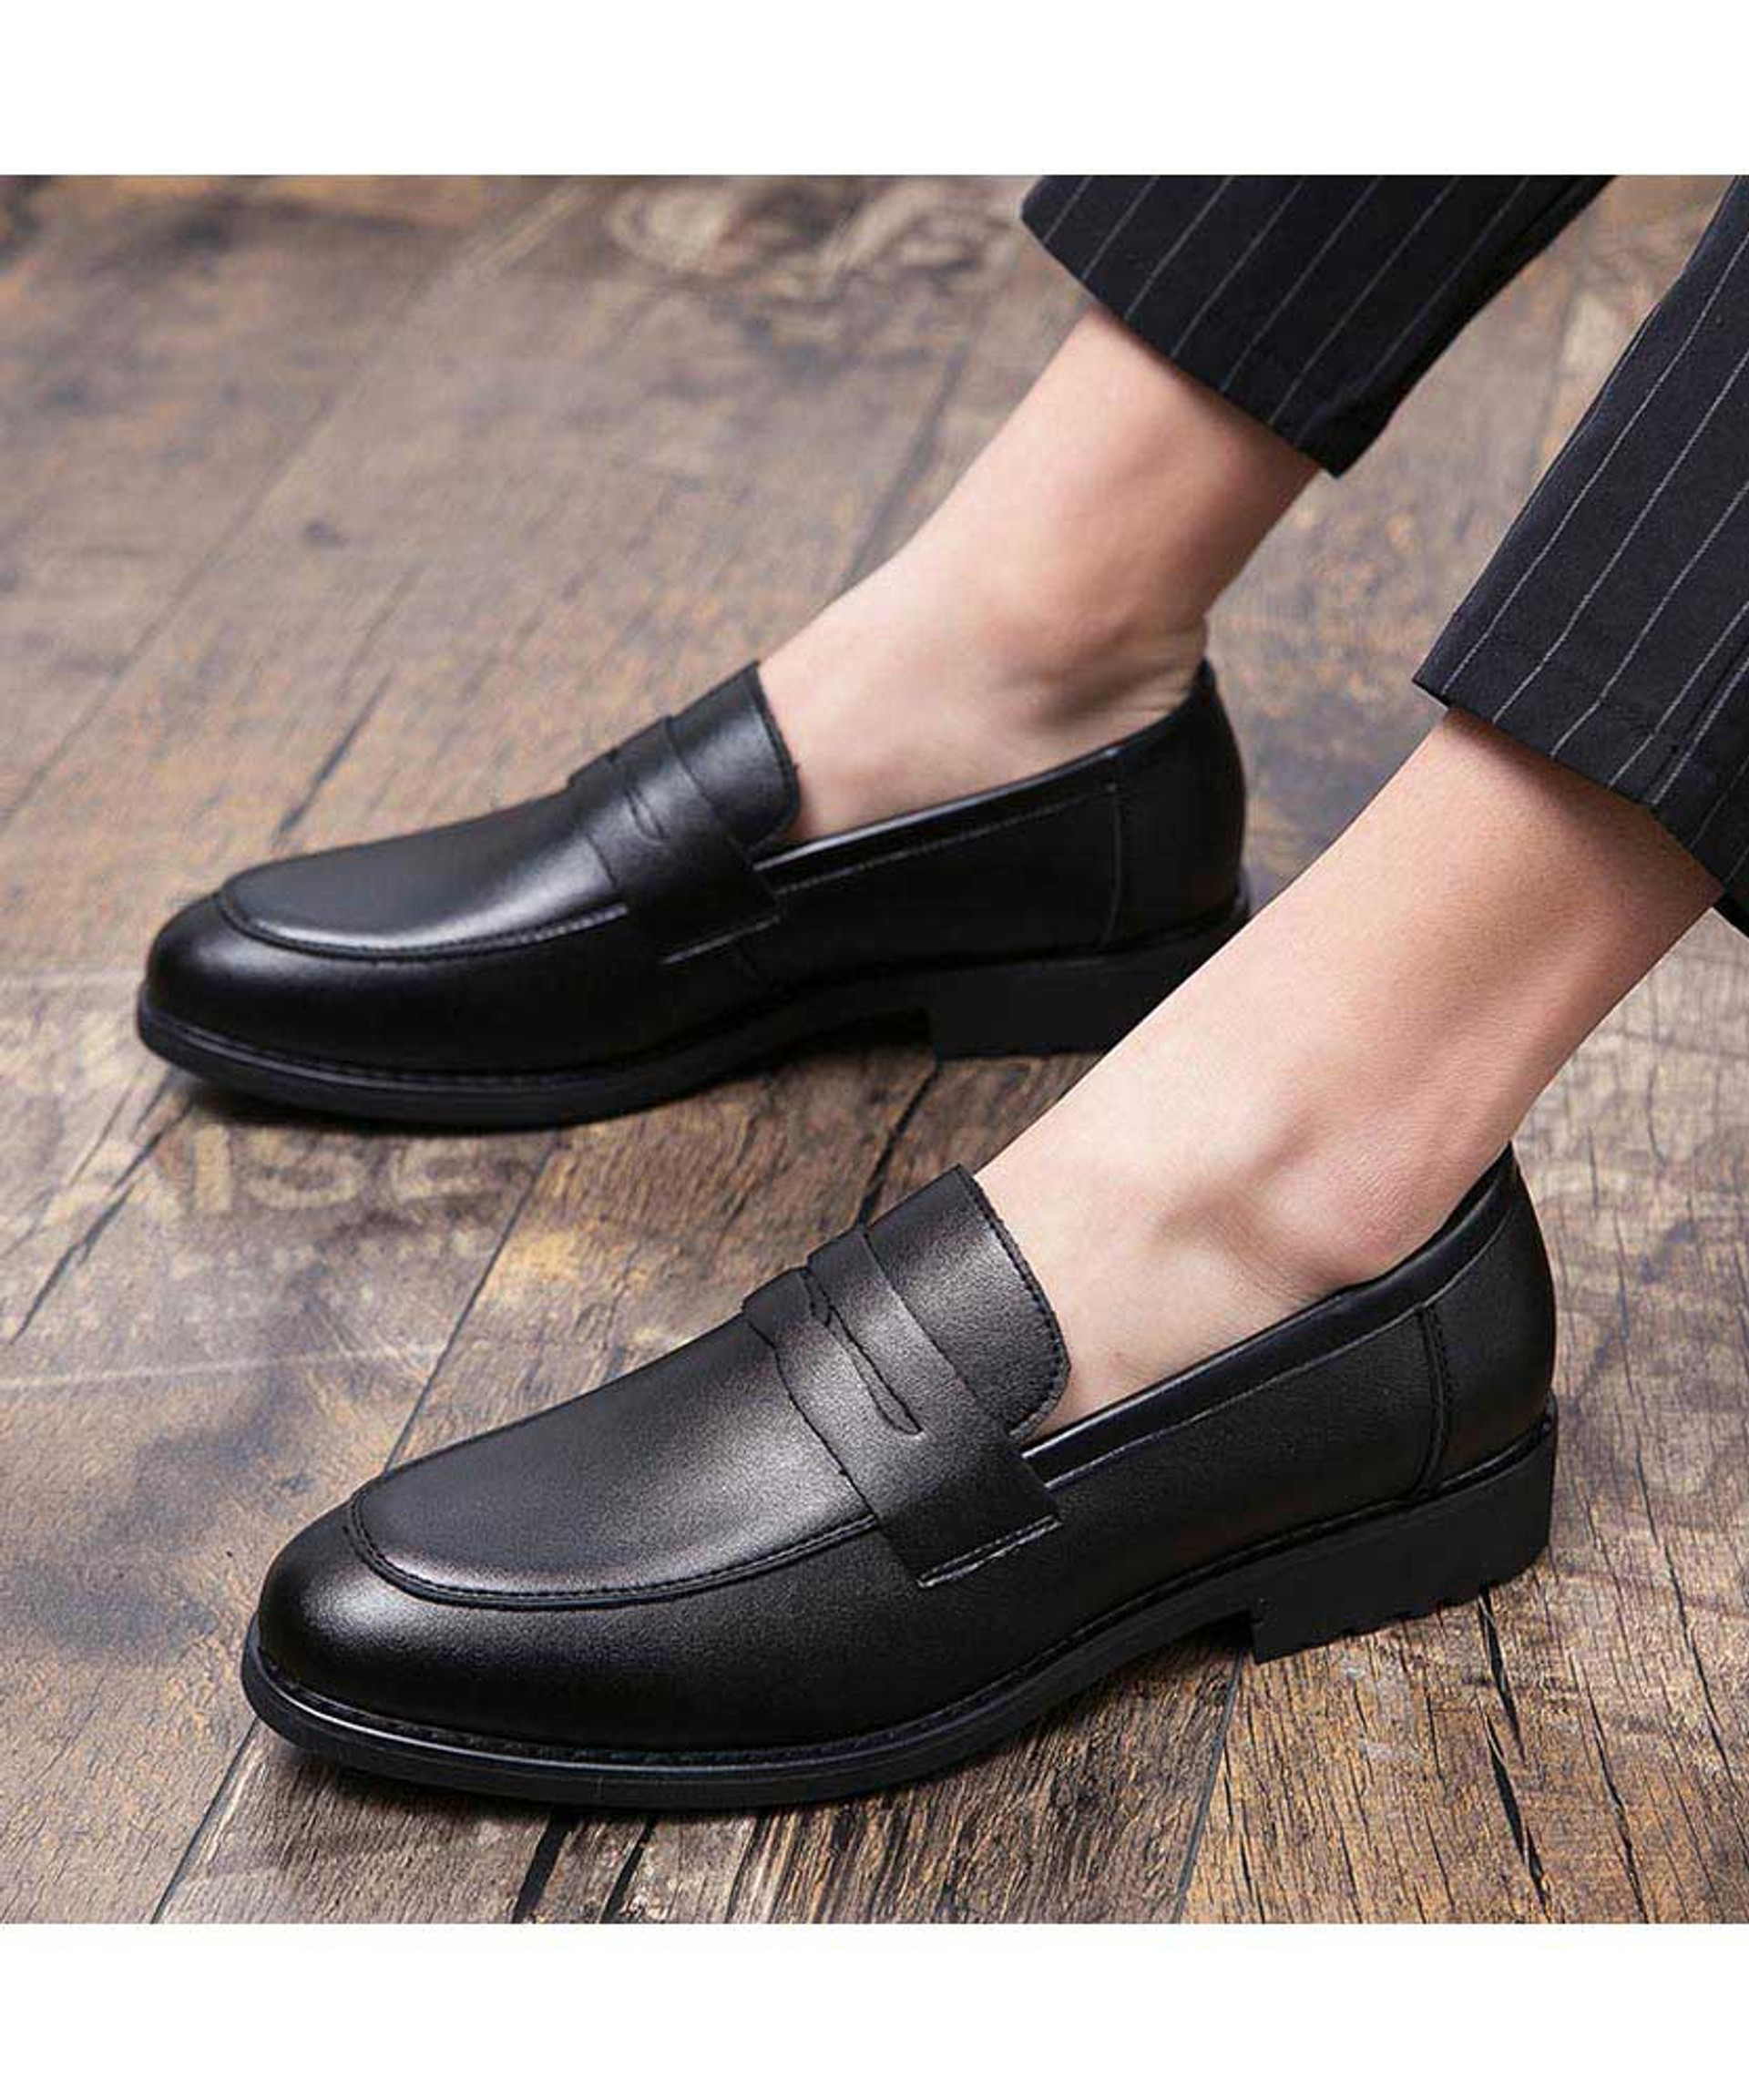 Black retro penny slip on dress shoe | Mens dress shoes online 2120MS